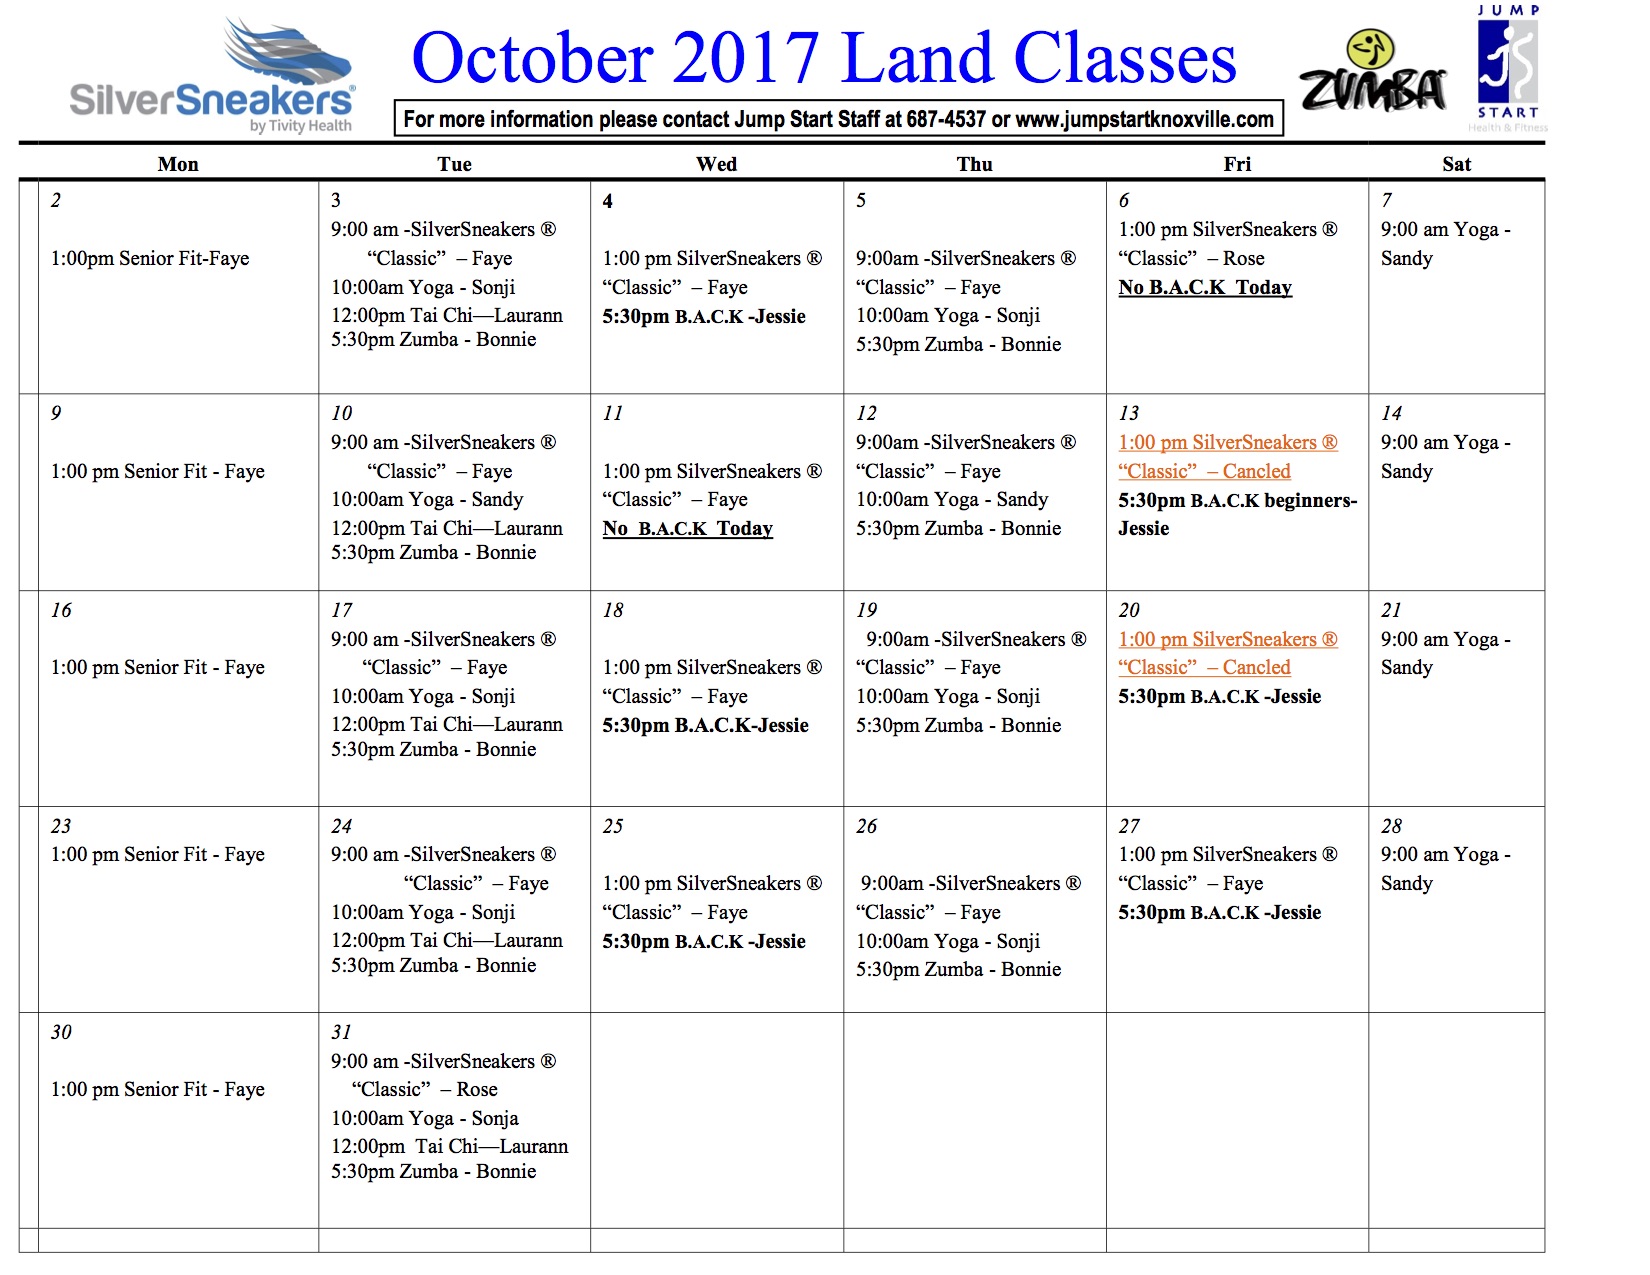 October 2017 Land Class Schedule